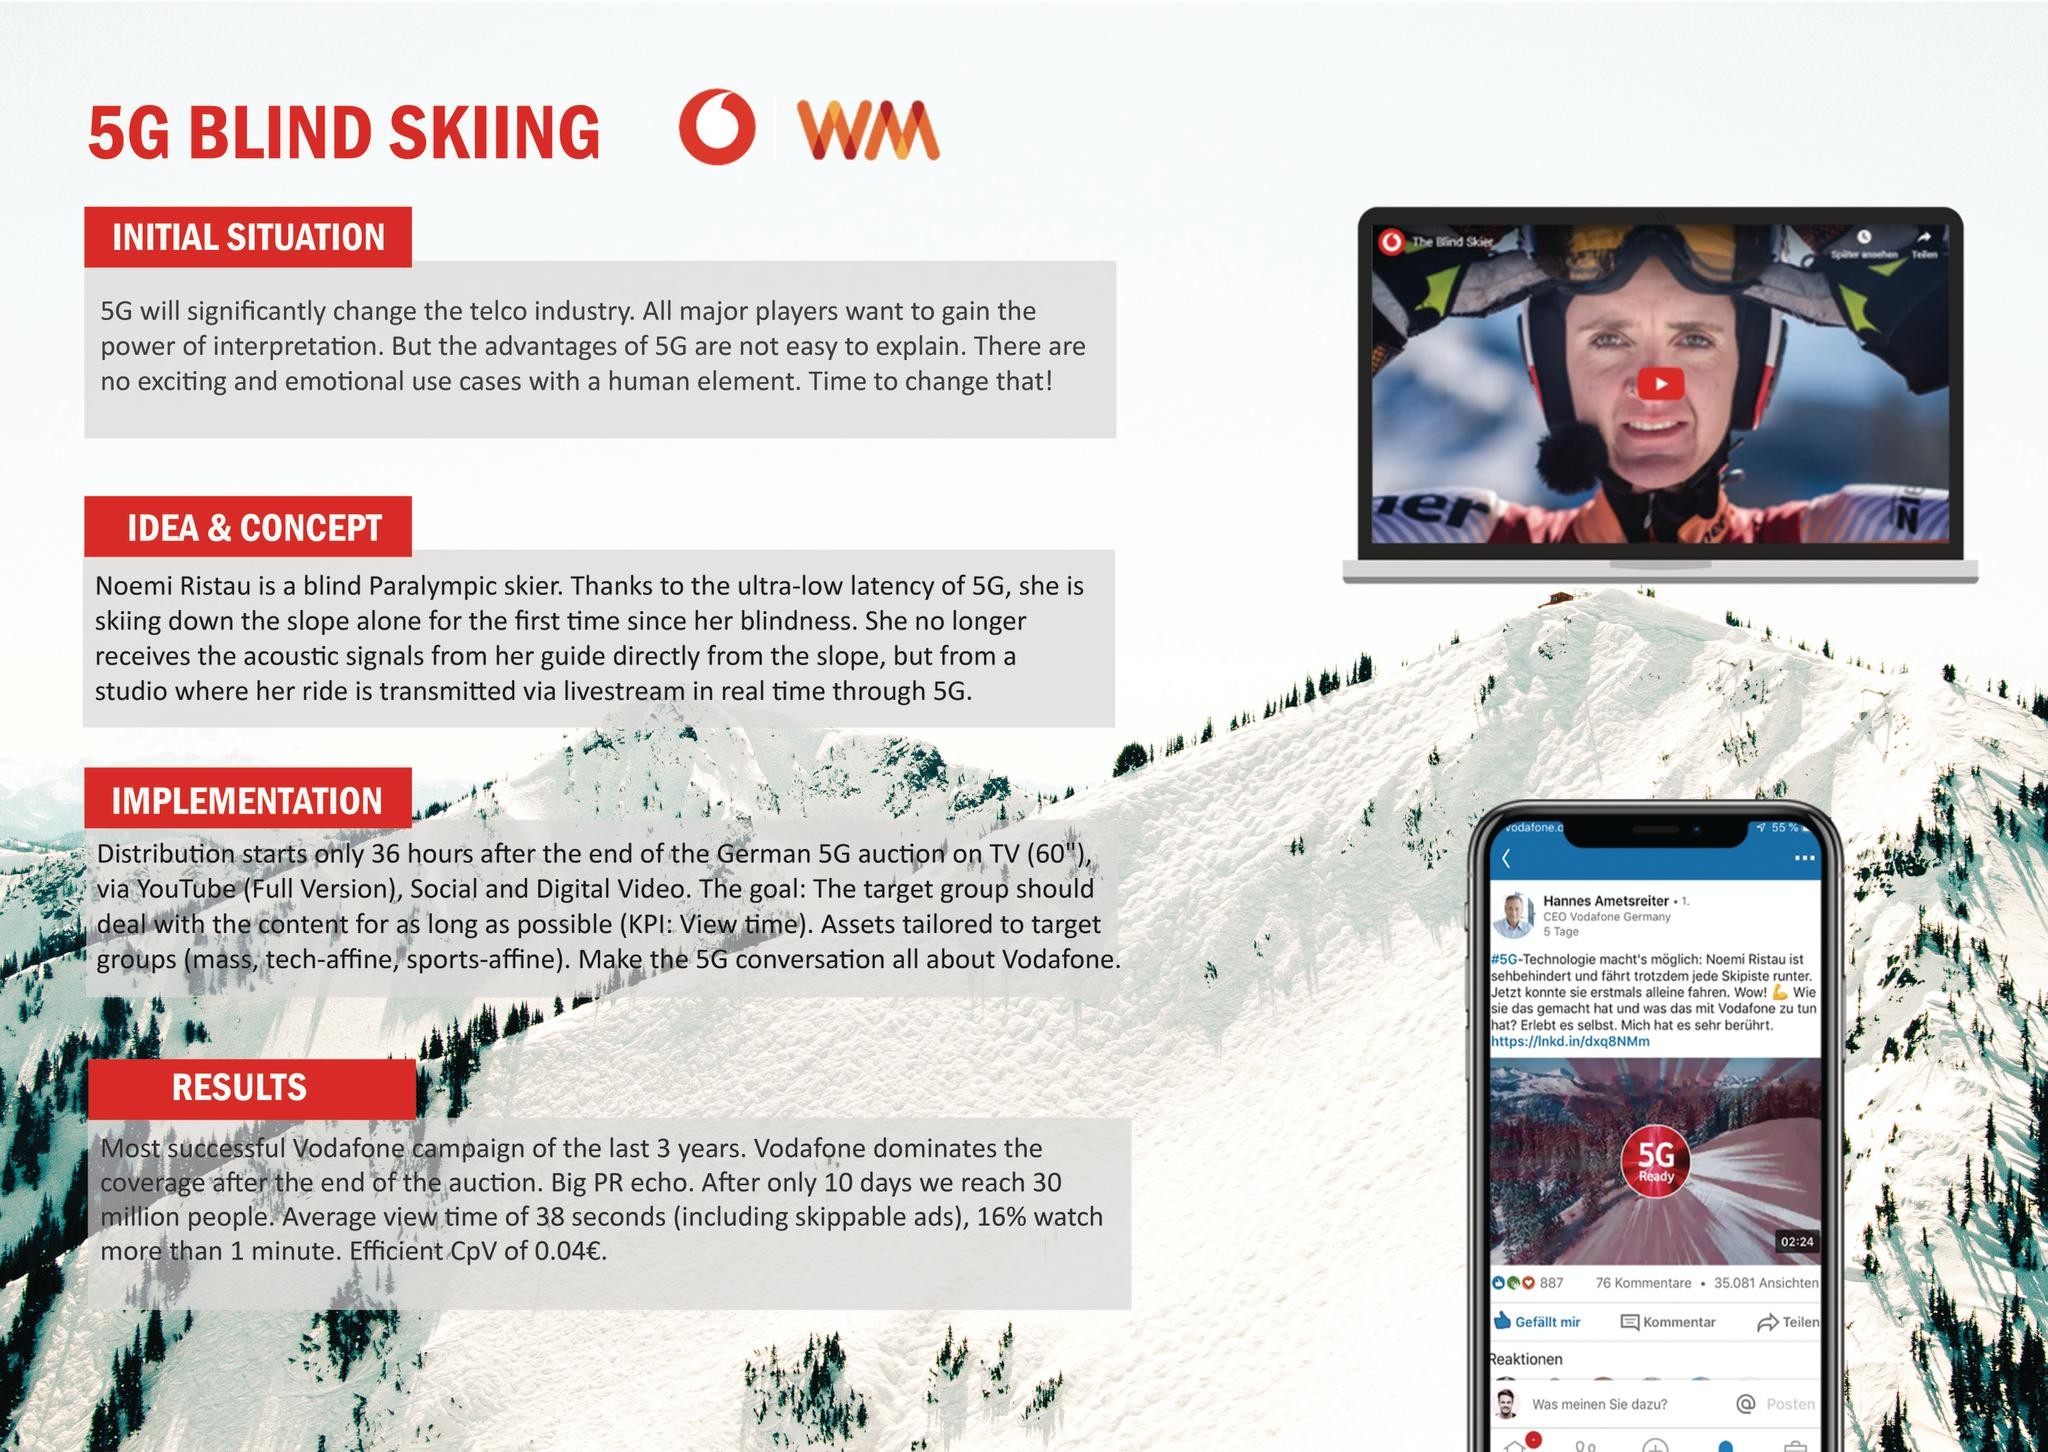 Vodafone 5G Blind Skiing